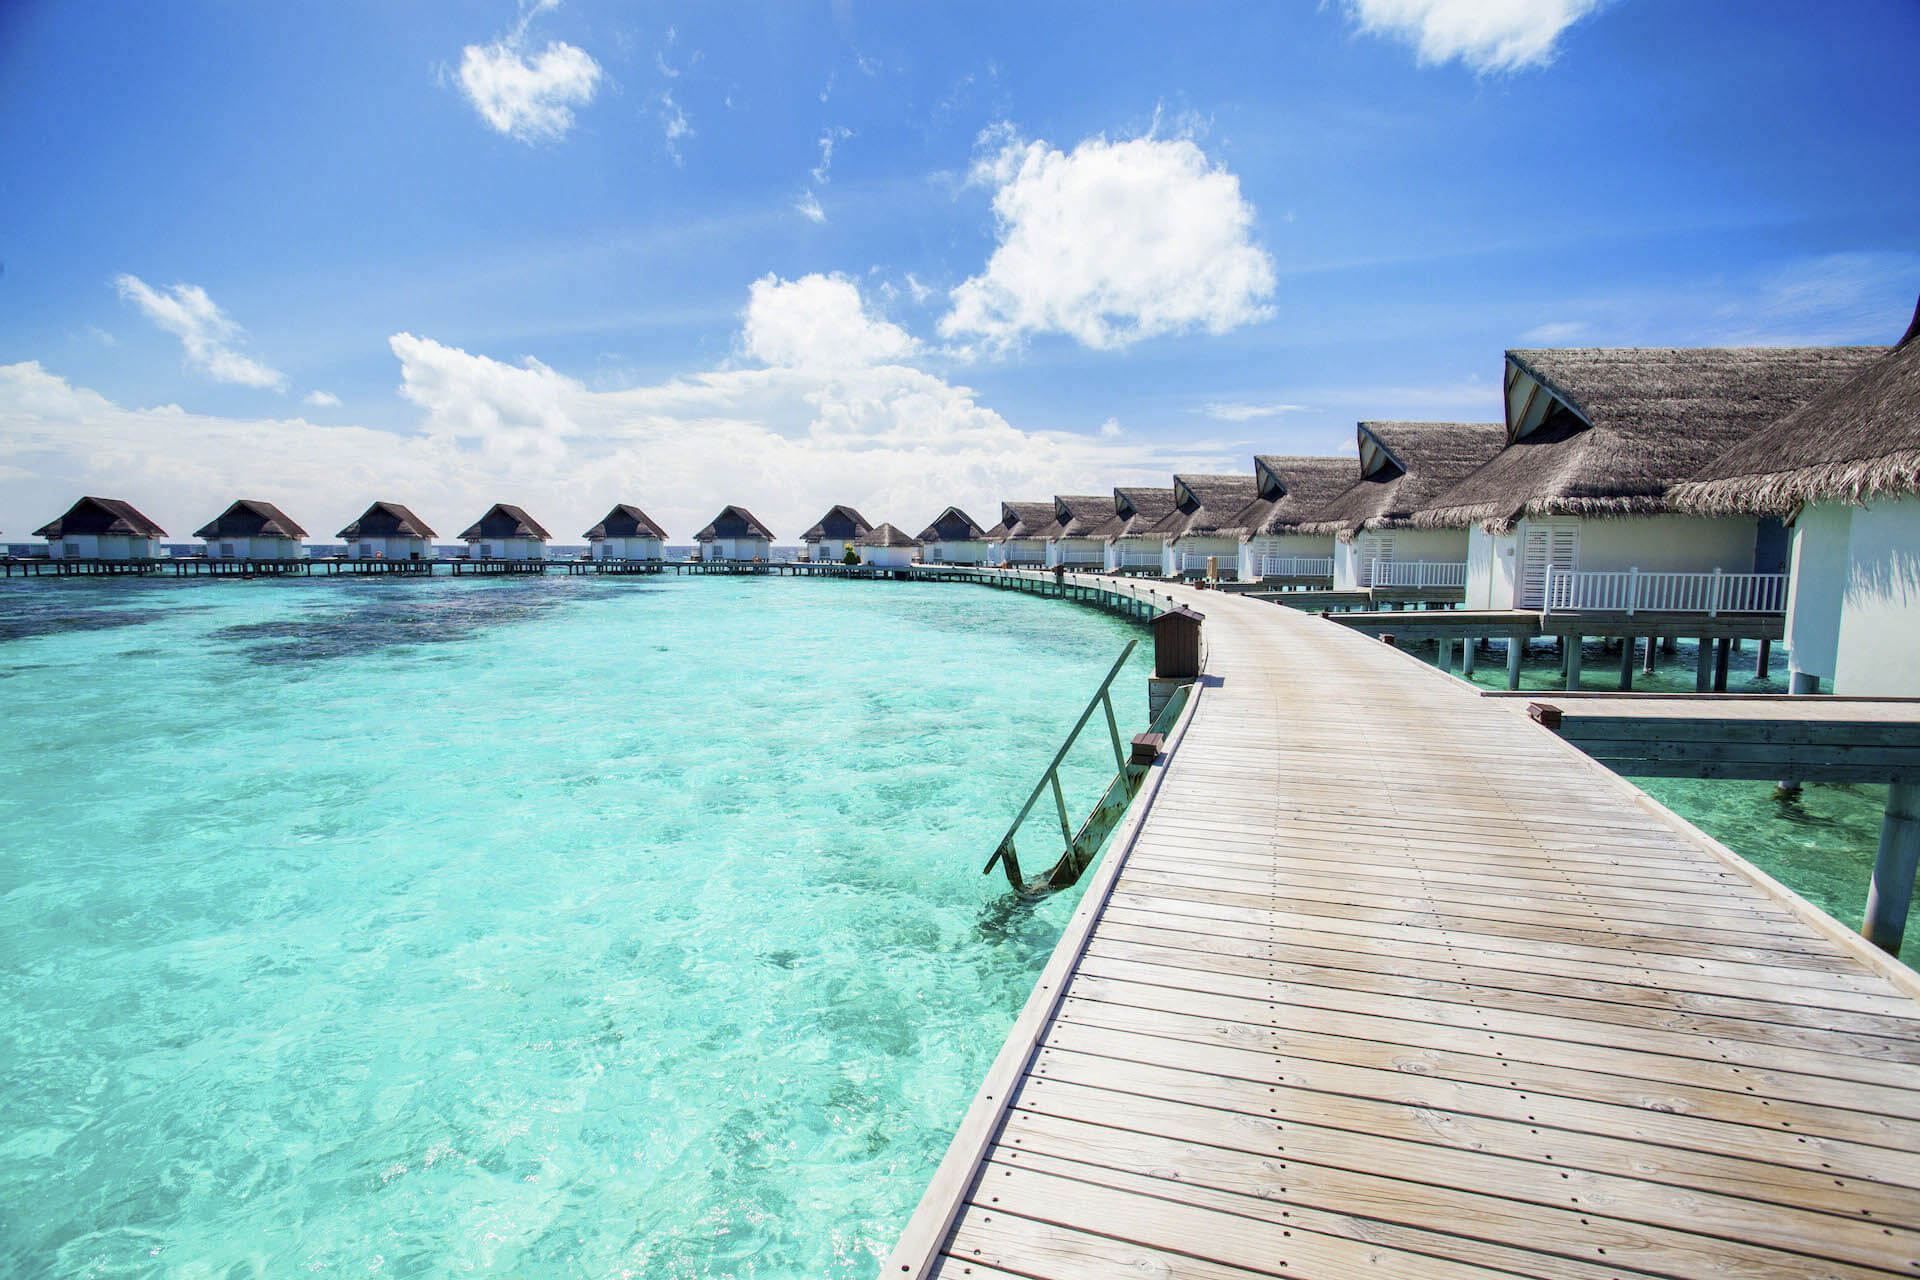 Centara grand island resort. Мальдивы Сан Исланд Резорт спа. Отель Sun Island Resort Spa 5 Мальдивы. Мальдивы Centara Grand Island. Остров Налагурайду Мальдивы.